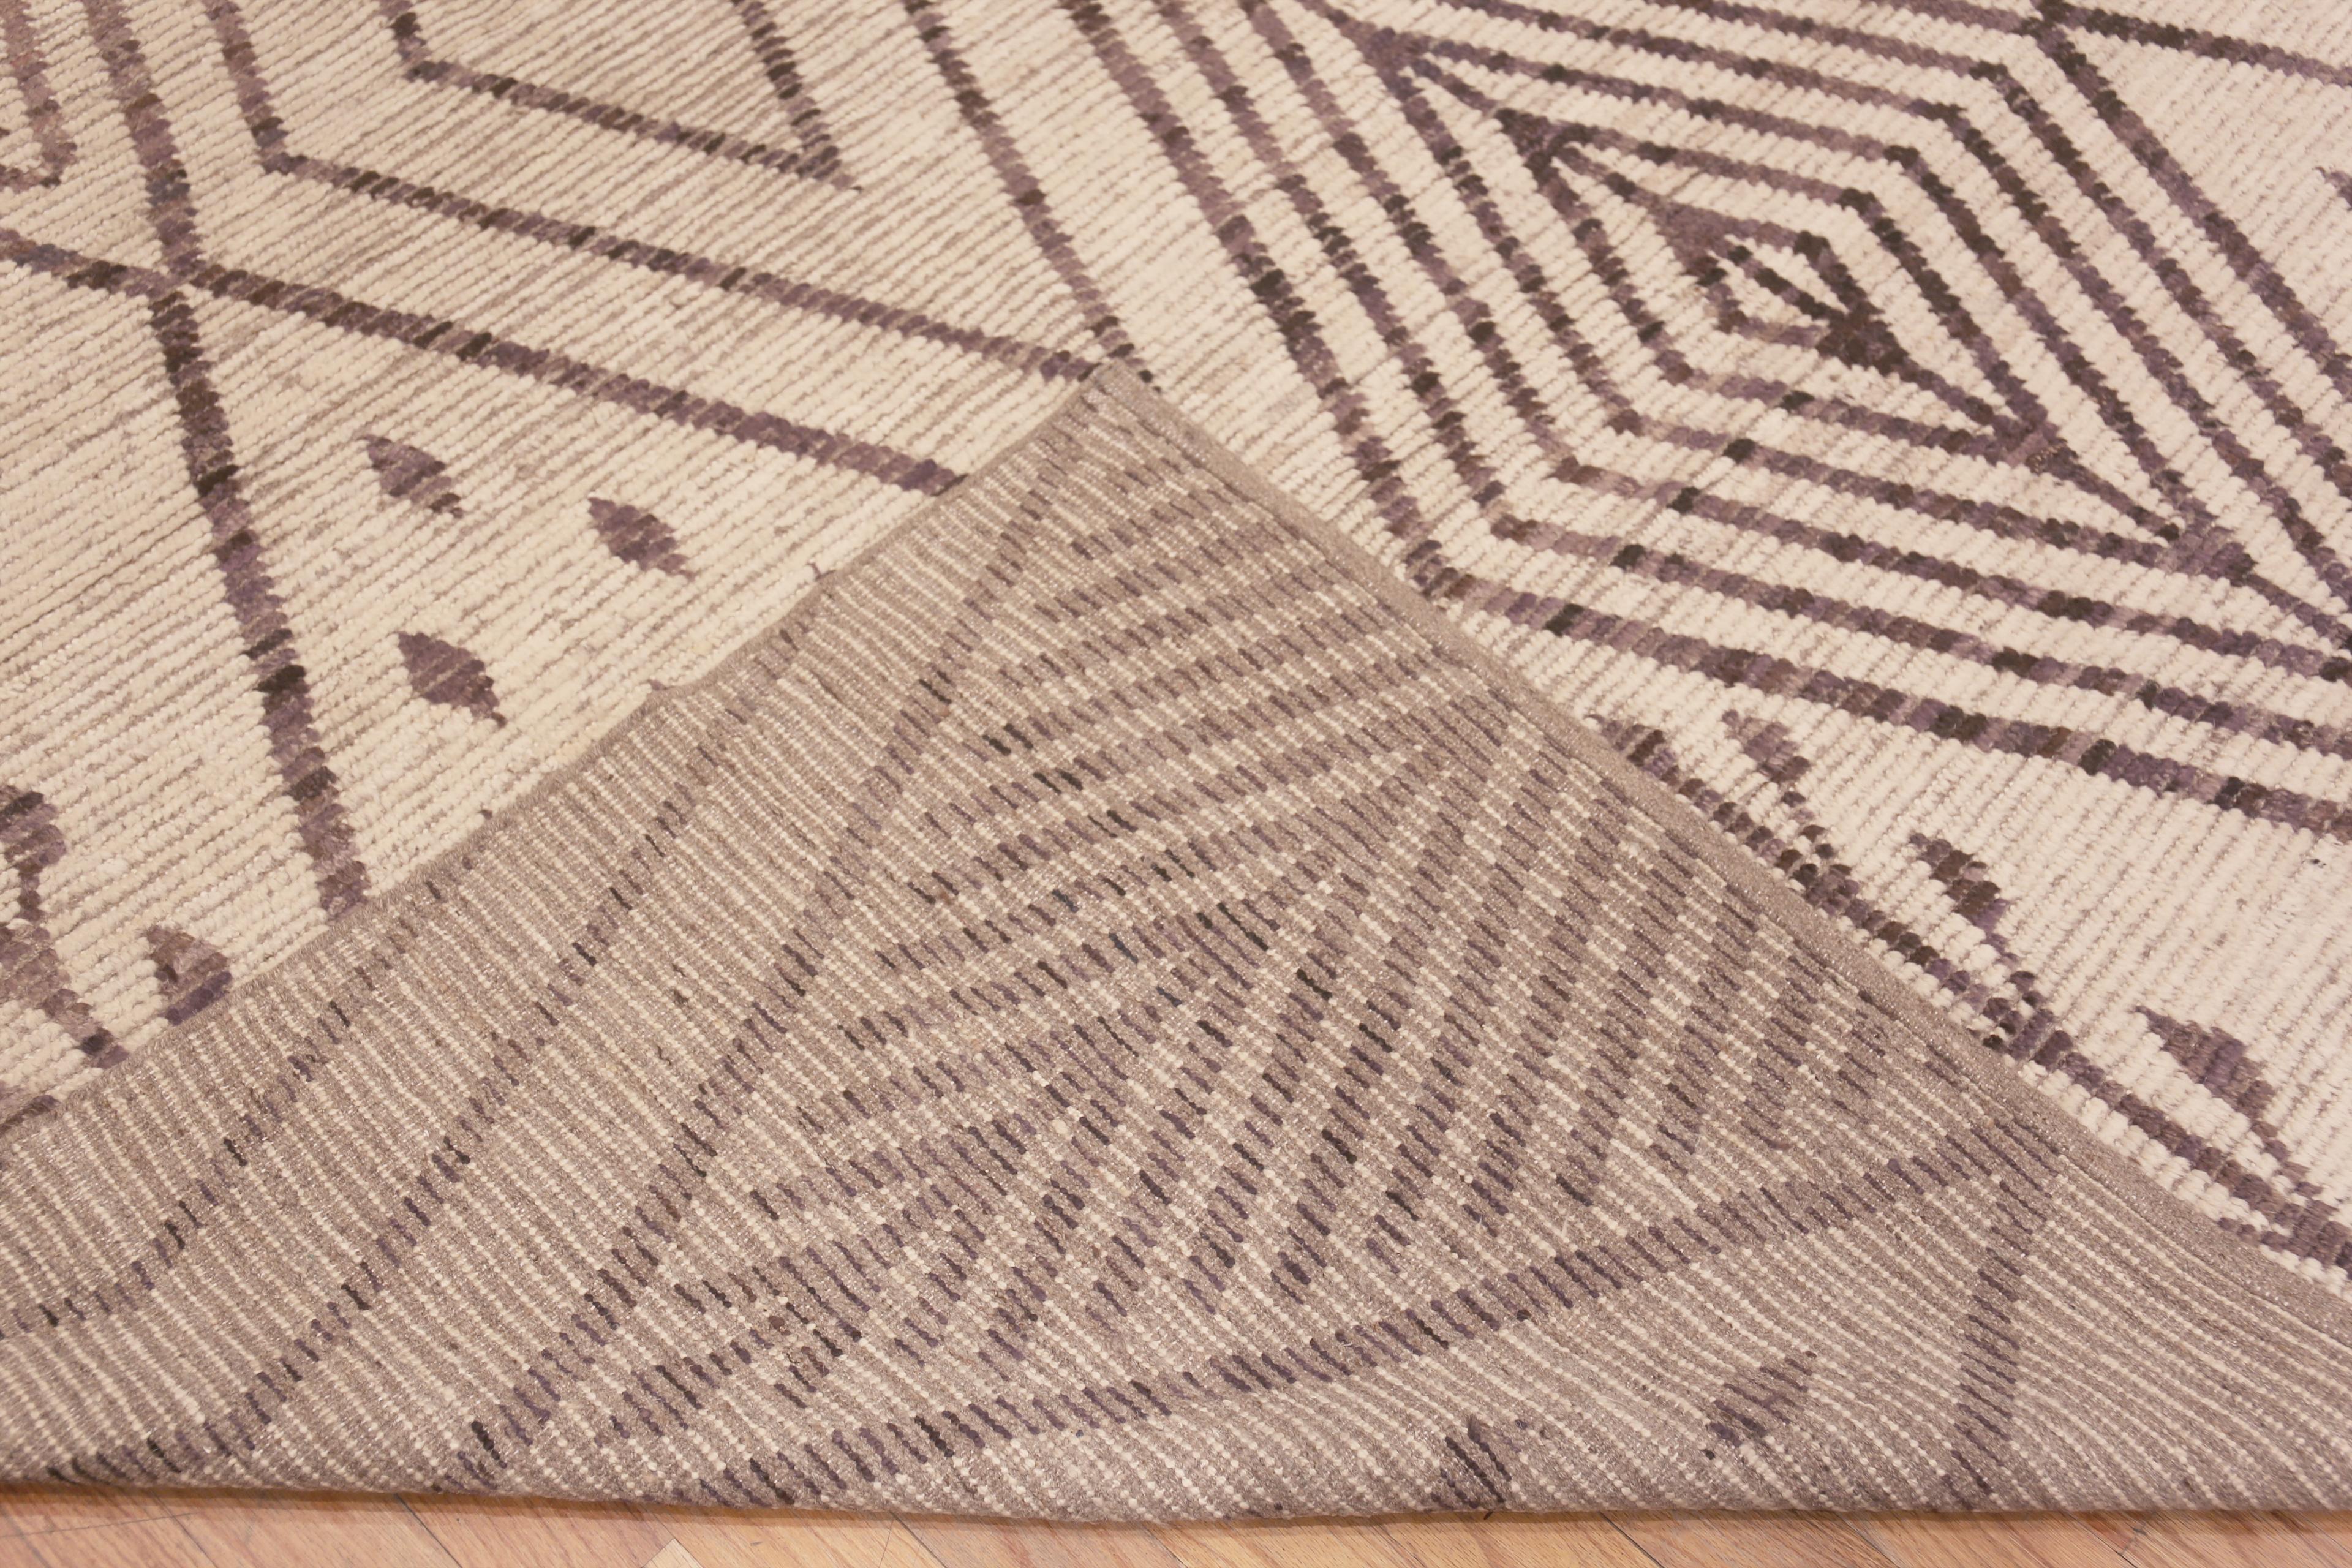 Collection Nazmiyal Tribal Geometric Beni Ourain Design Modern Rug 12' x 15'3